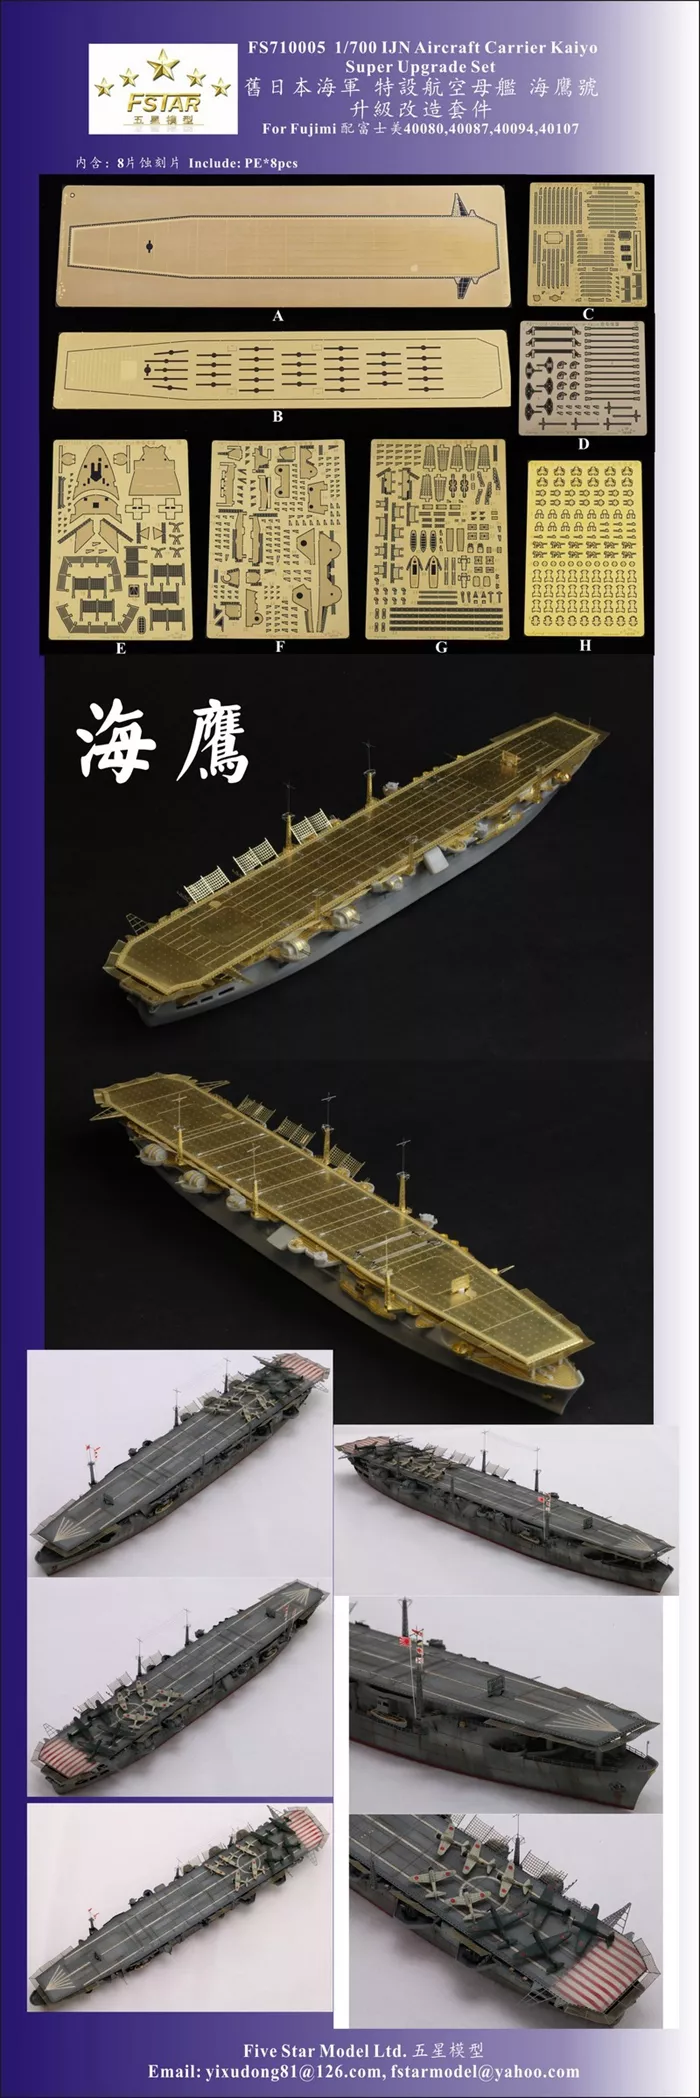 FS710005 1/700 IJN Aircraft Carrier Kaiyo 海鹰Upgrade set For 